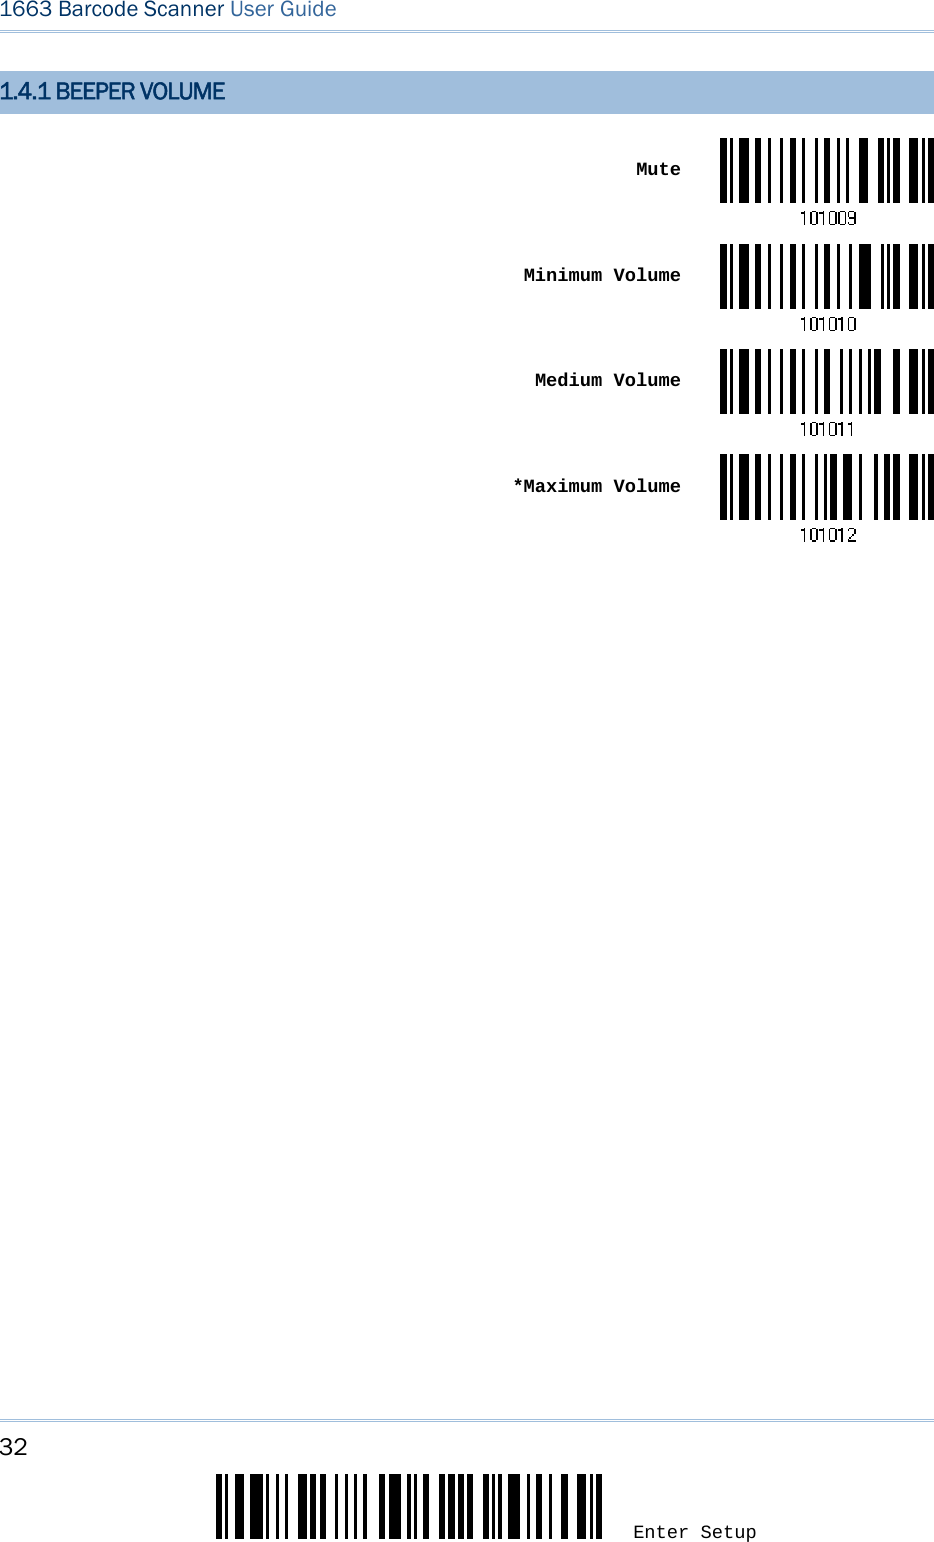 32 Enter Setup 1663 Barcode Scanner User Guide  1.4.1 BEEPER VOLUME  Mute Minimum Volume Medium Volume *Maximum Volume  